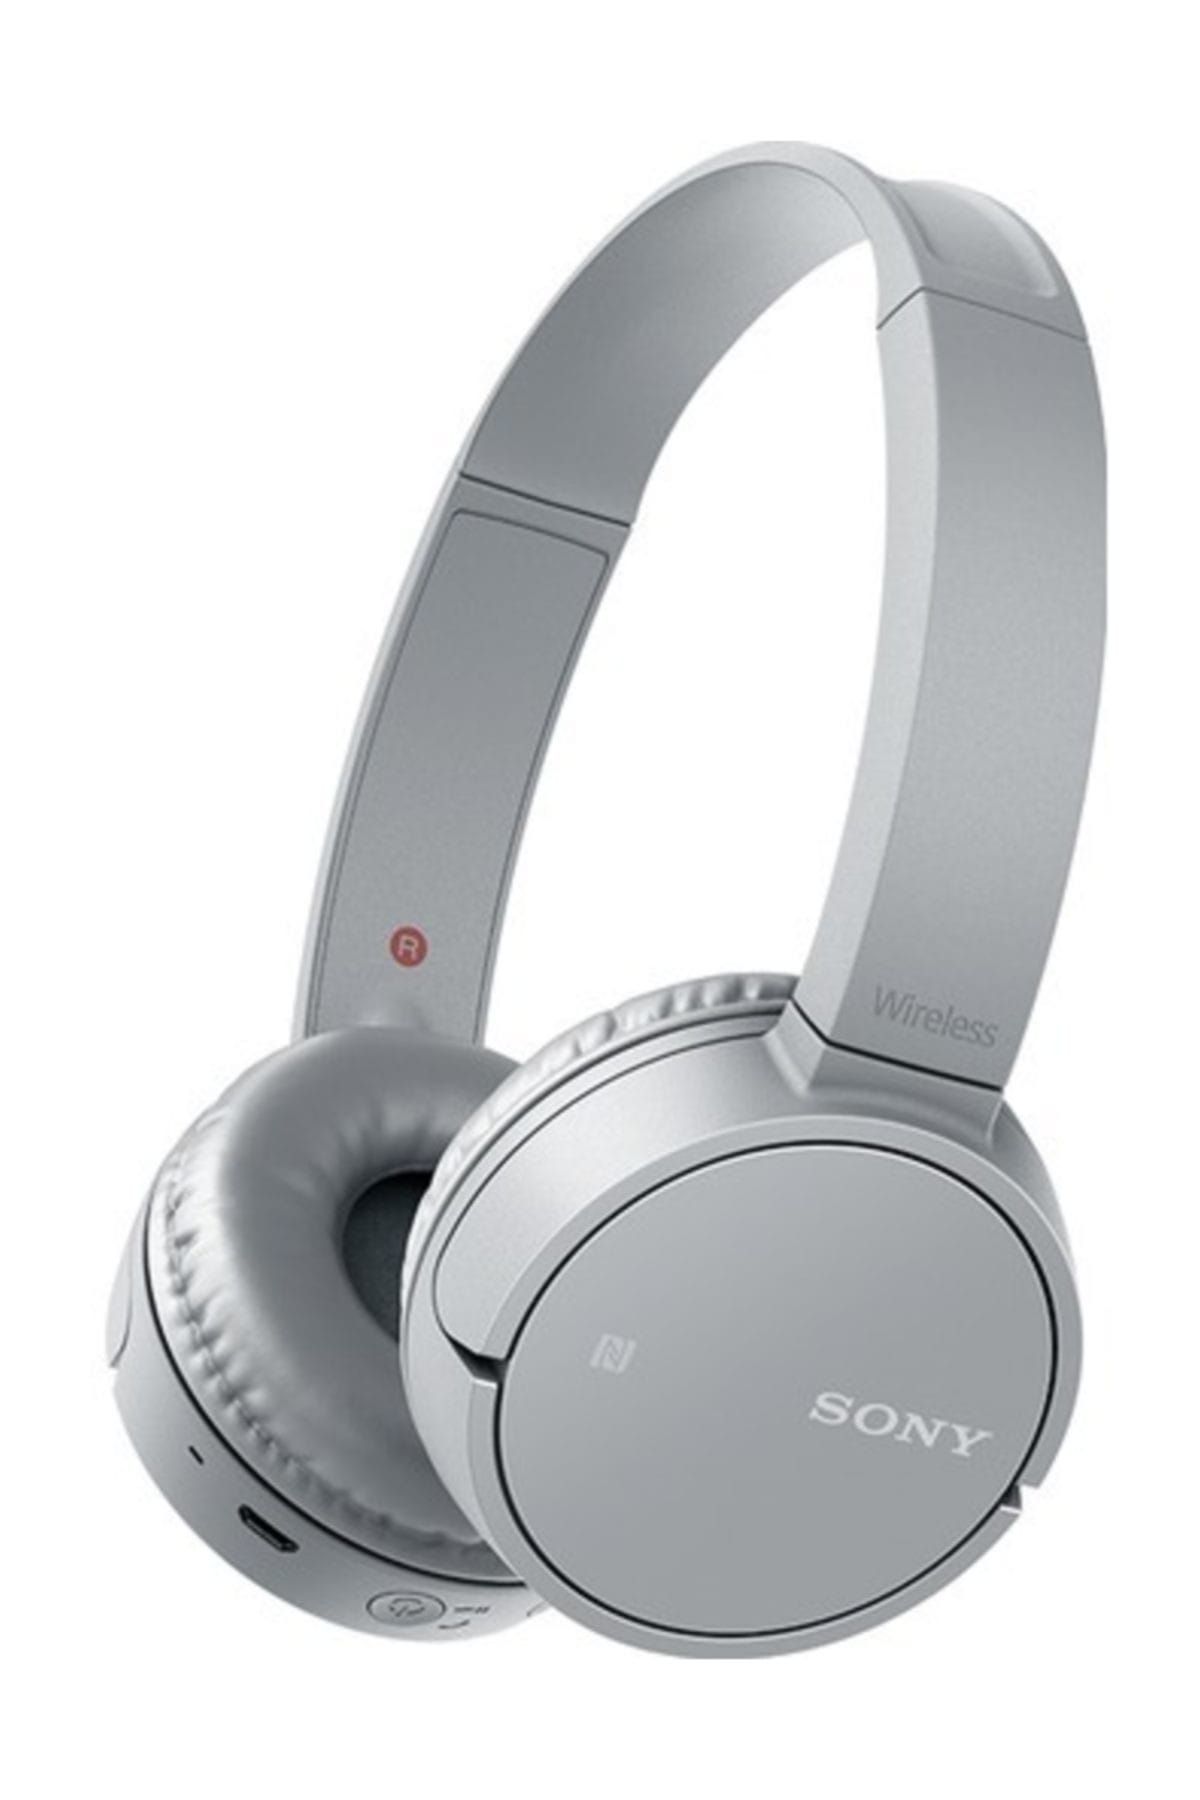 Sony WHCH500H Kulaküstü Bluetooth Kablosuz Kulaklık Gri